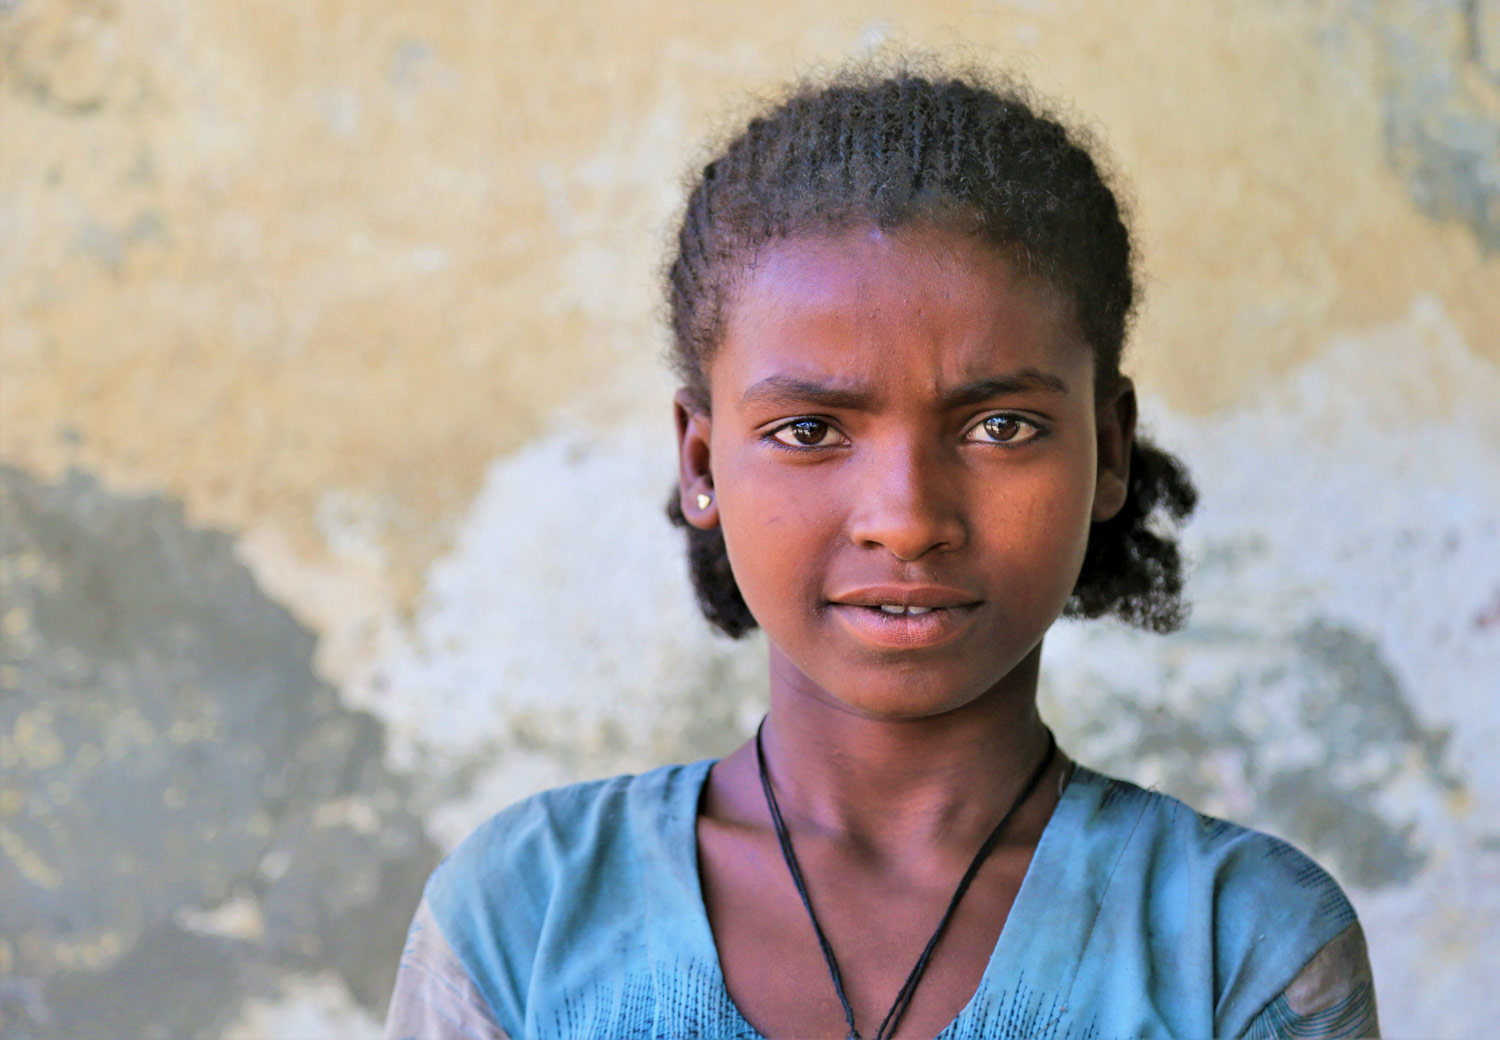 Jente fra Etiopia. Jenter i krise.